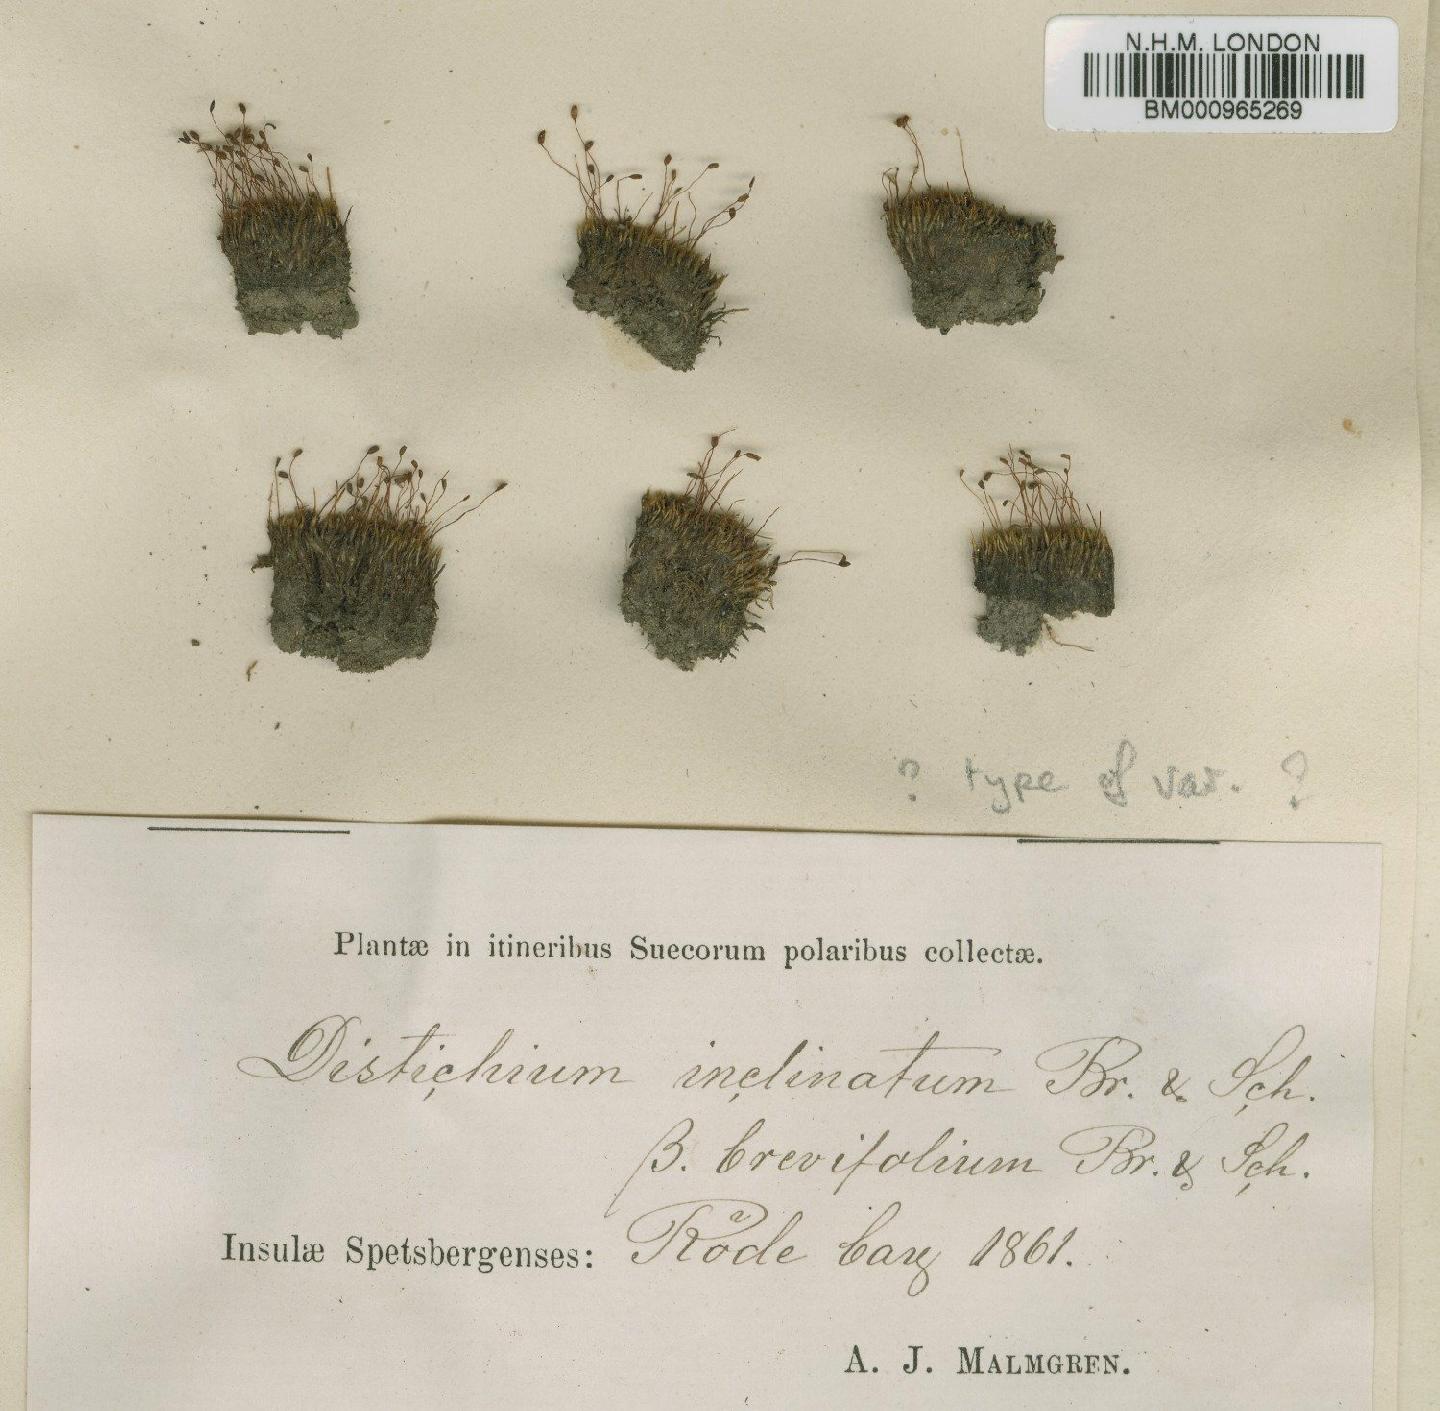 To NHMUK collection (Distichium inclinatum (Hedw.) Bruch & Schimp.; TYPE; NHMUK:ecatalogue:760)